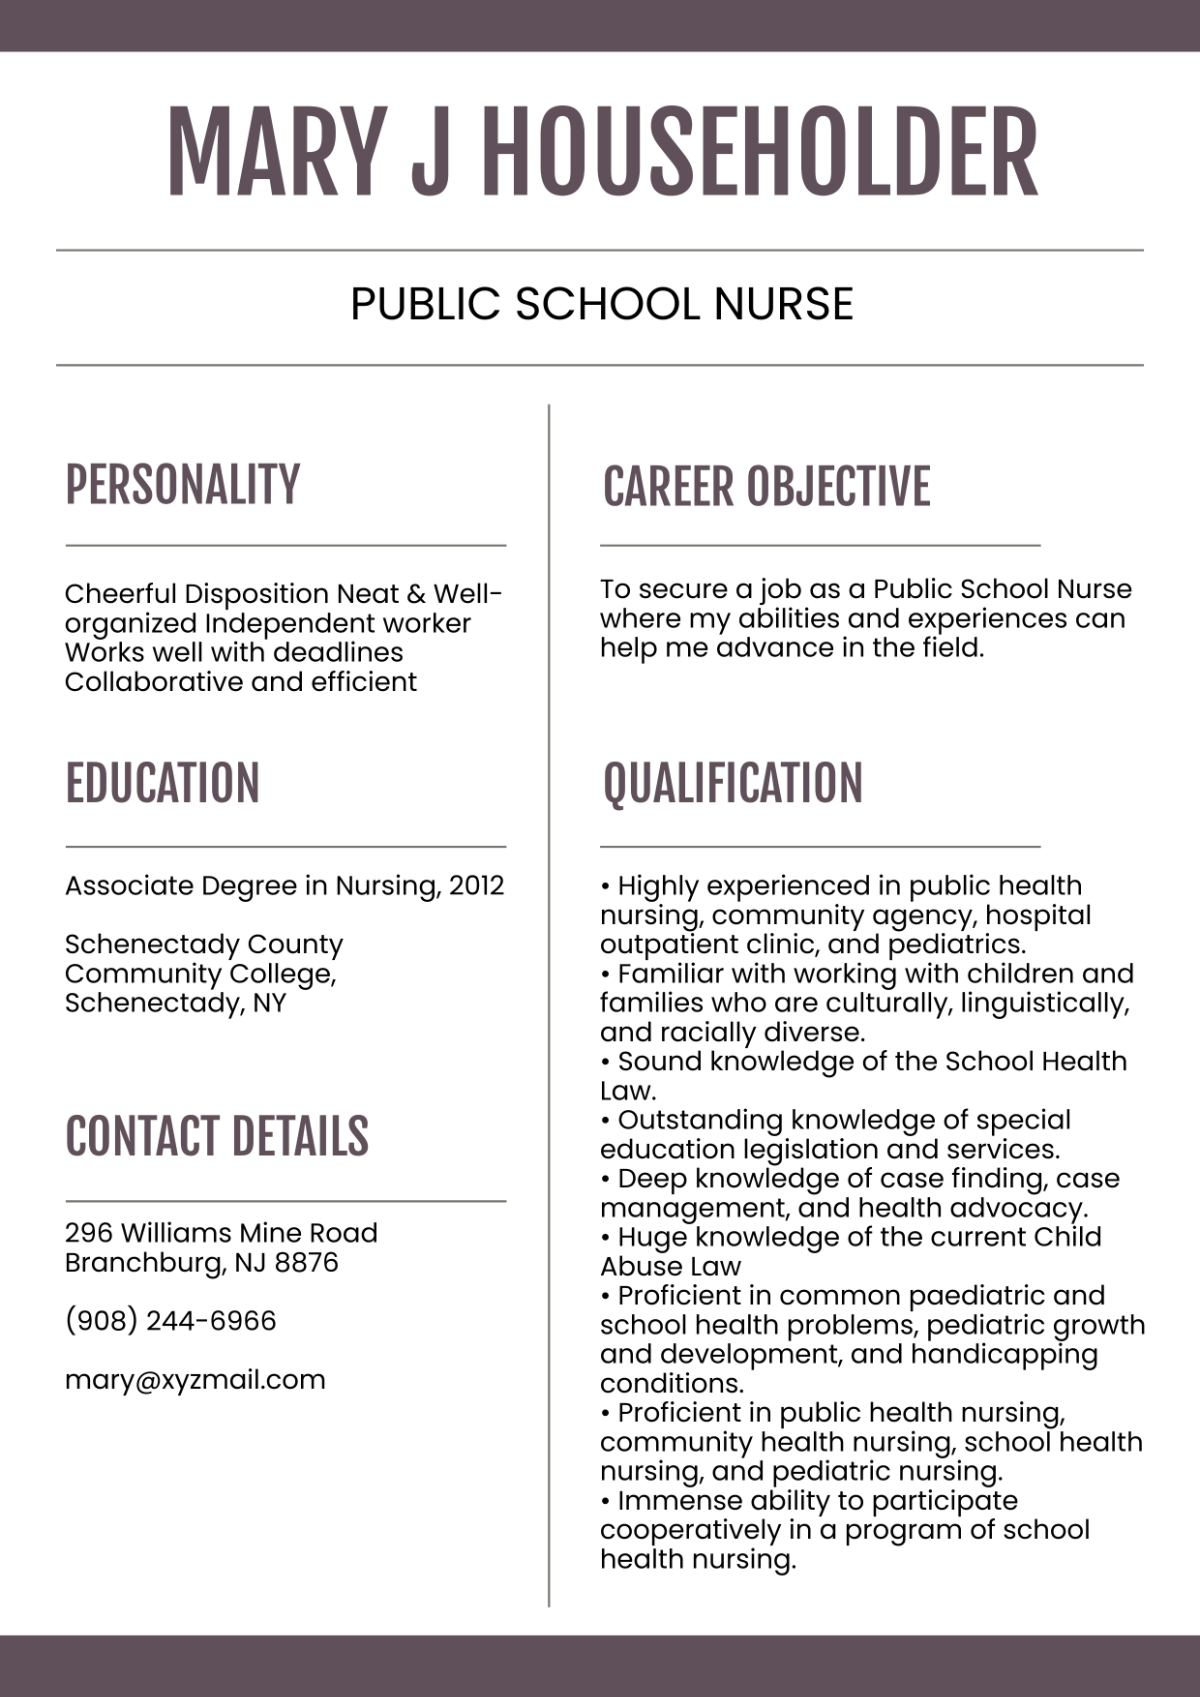 Free Public School Nurse Resume